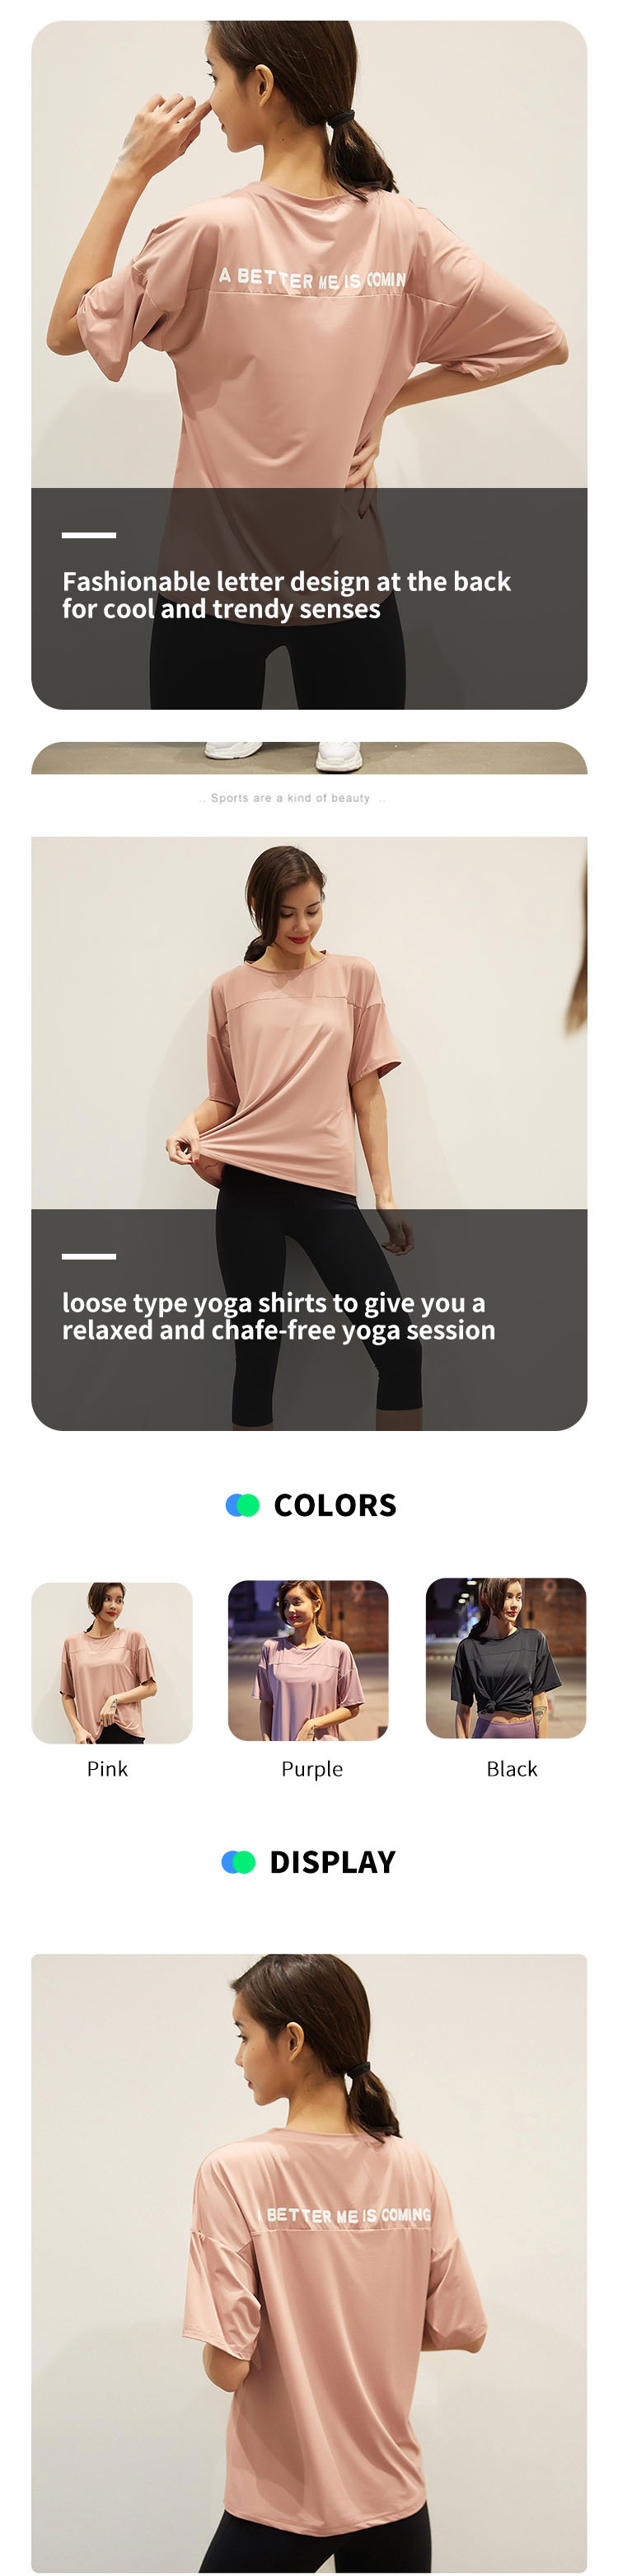 Loose Yoga Shirts